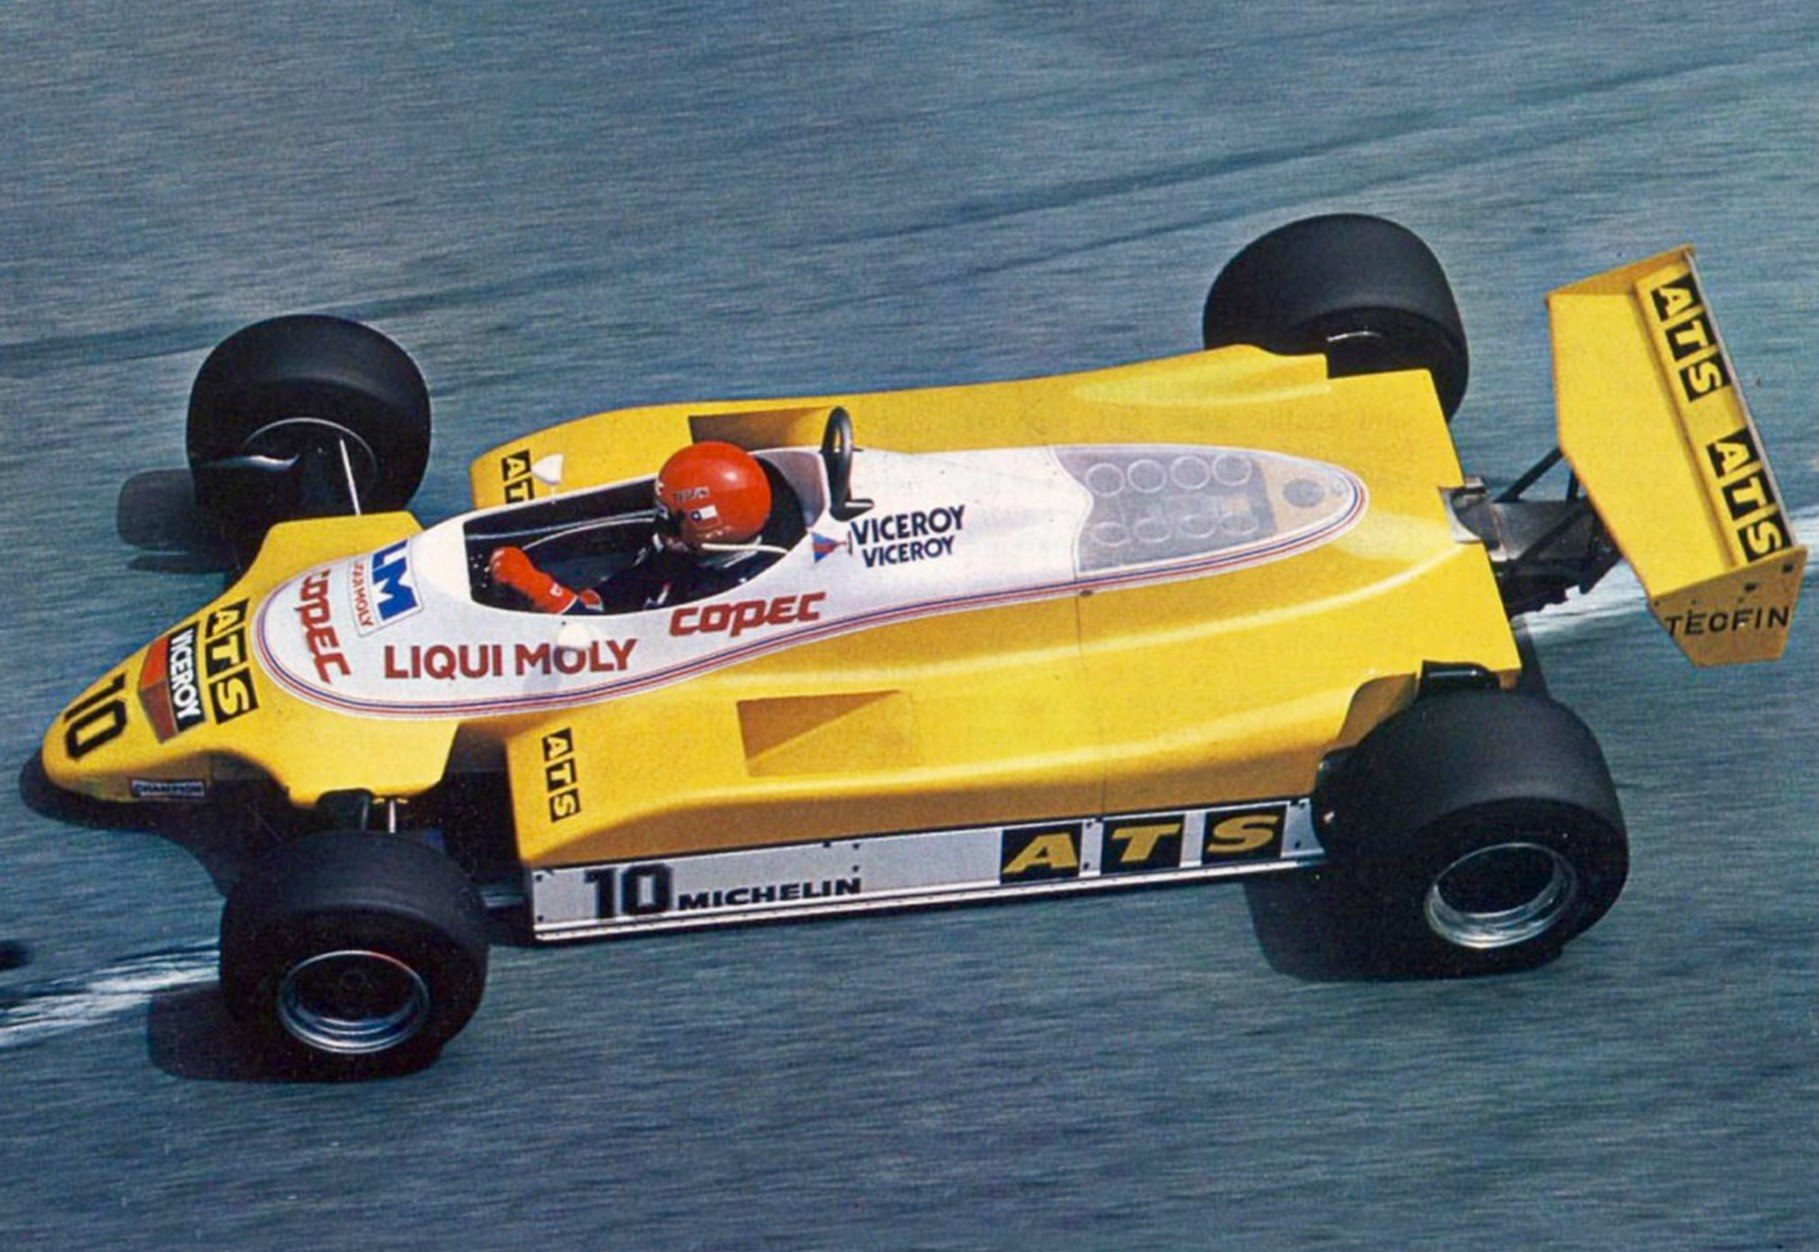 Eliseo Salazar’s ATS in the 1982 Formula 1 season.